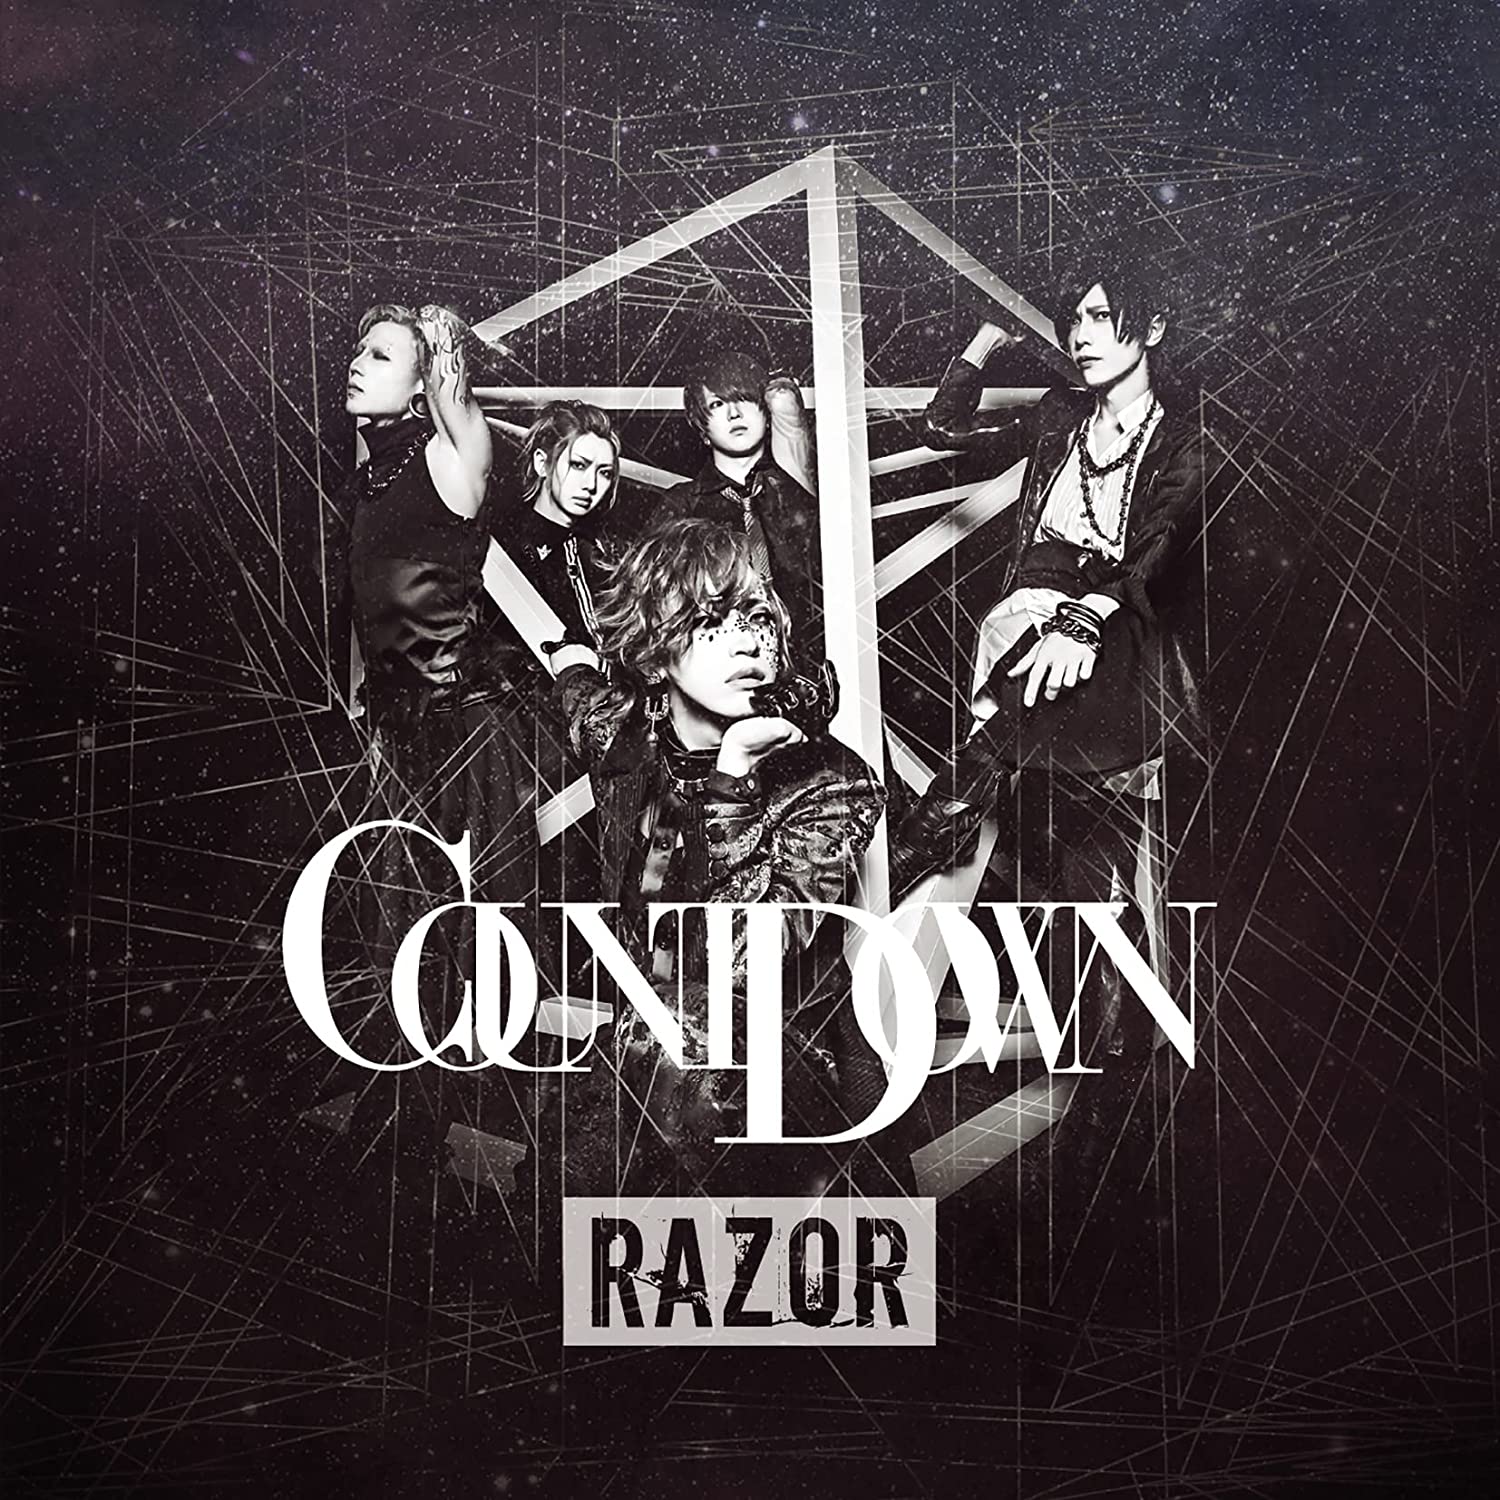 RAZOR/COUNTDOWN